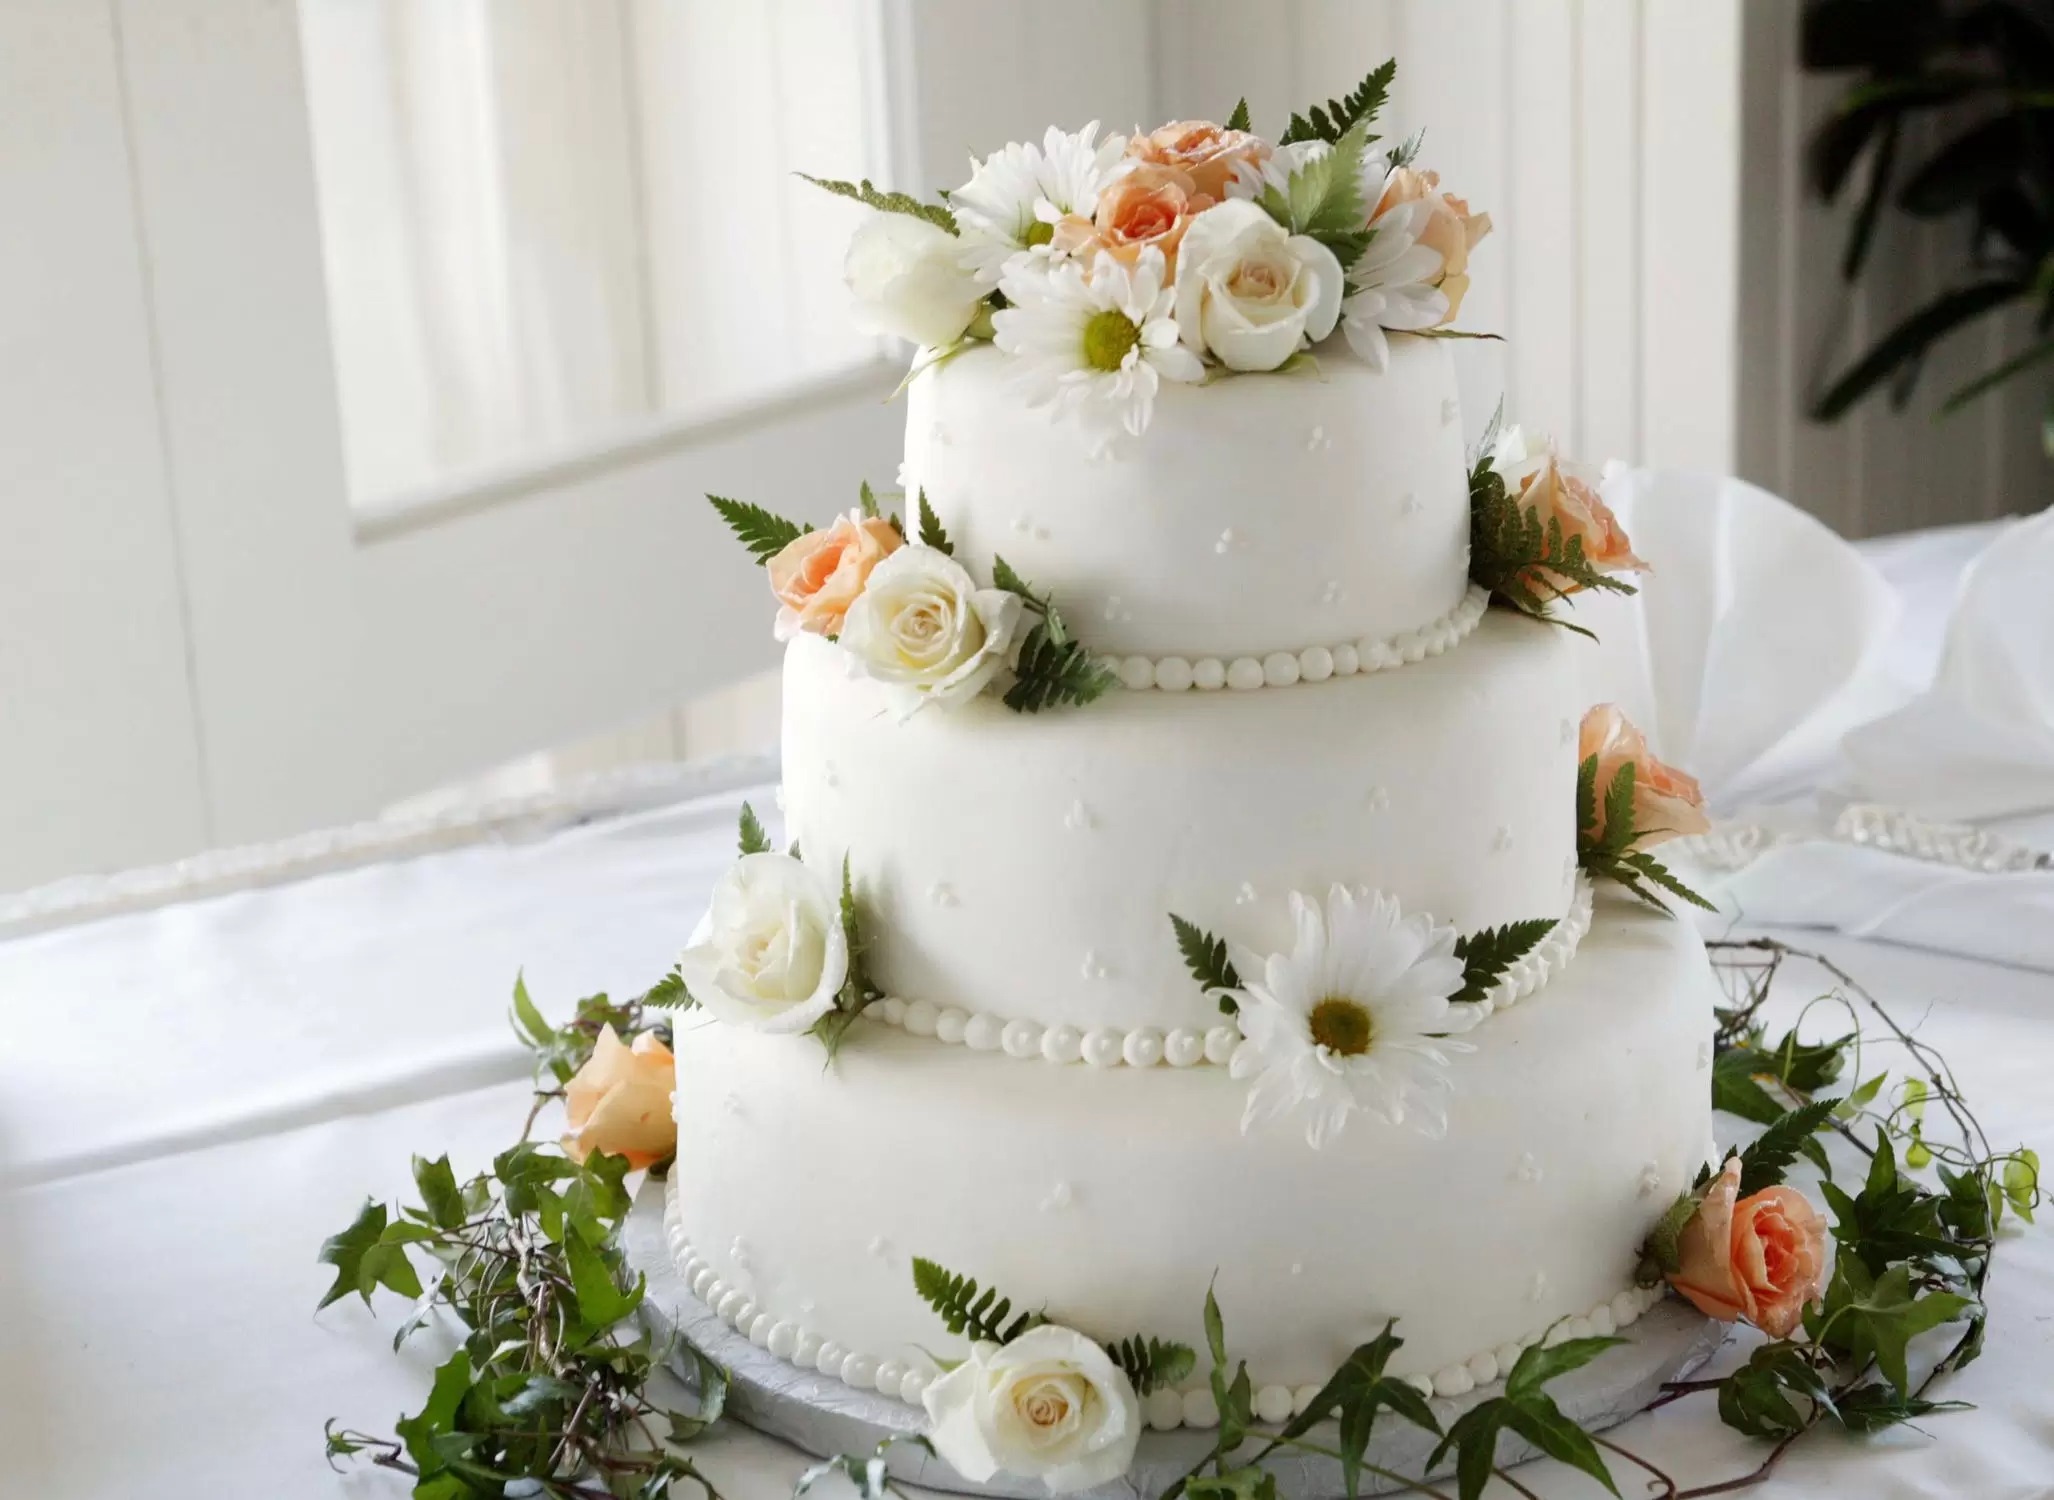 Importance of wedding cakes